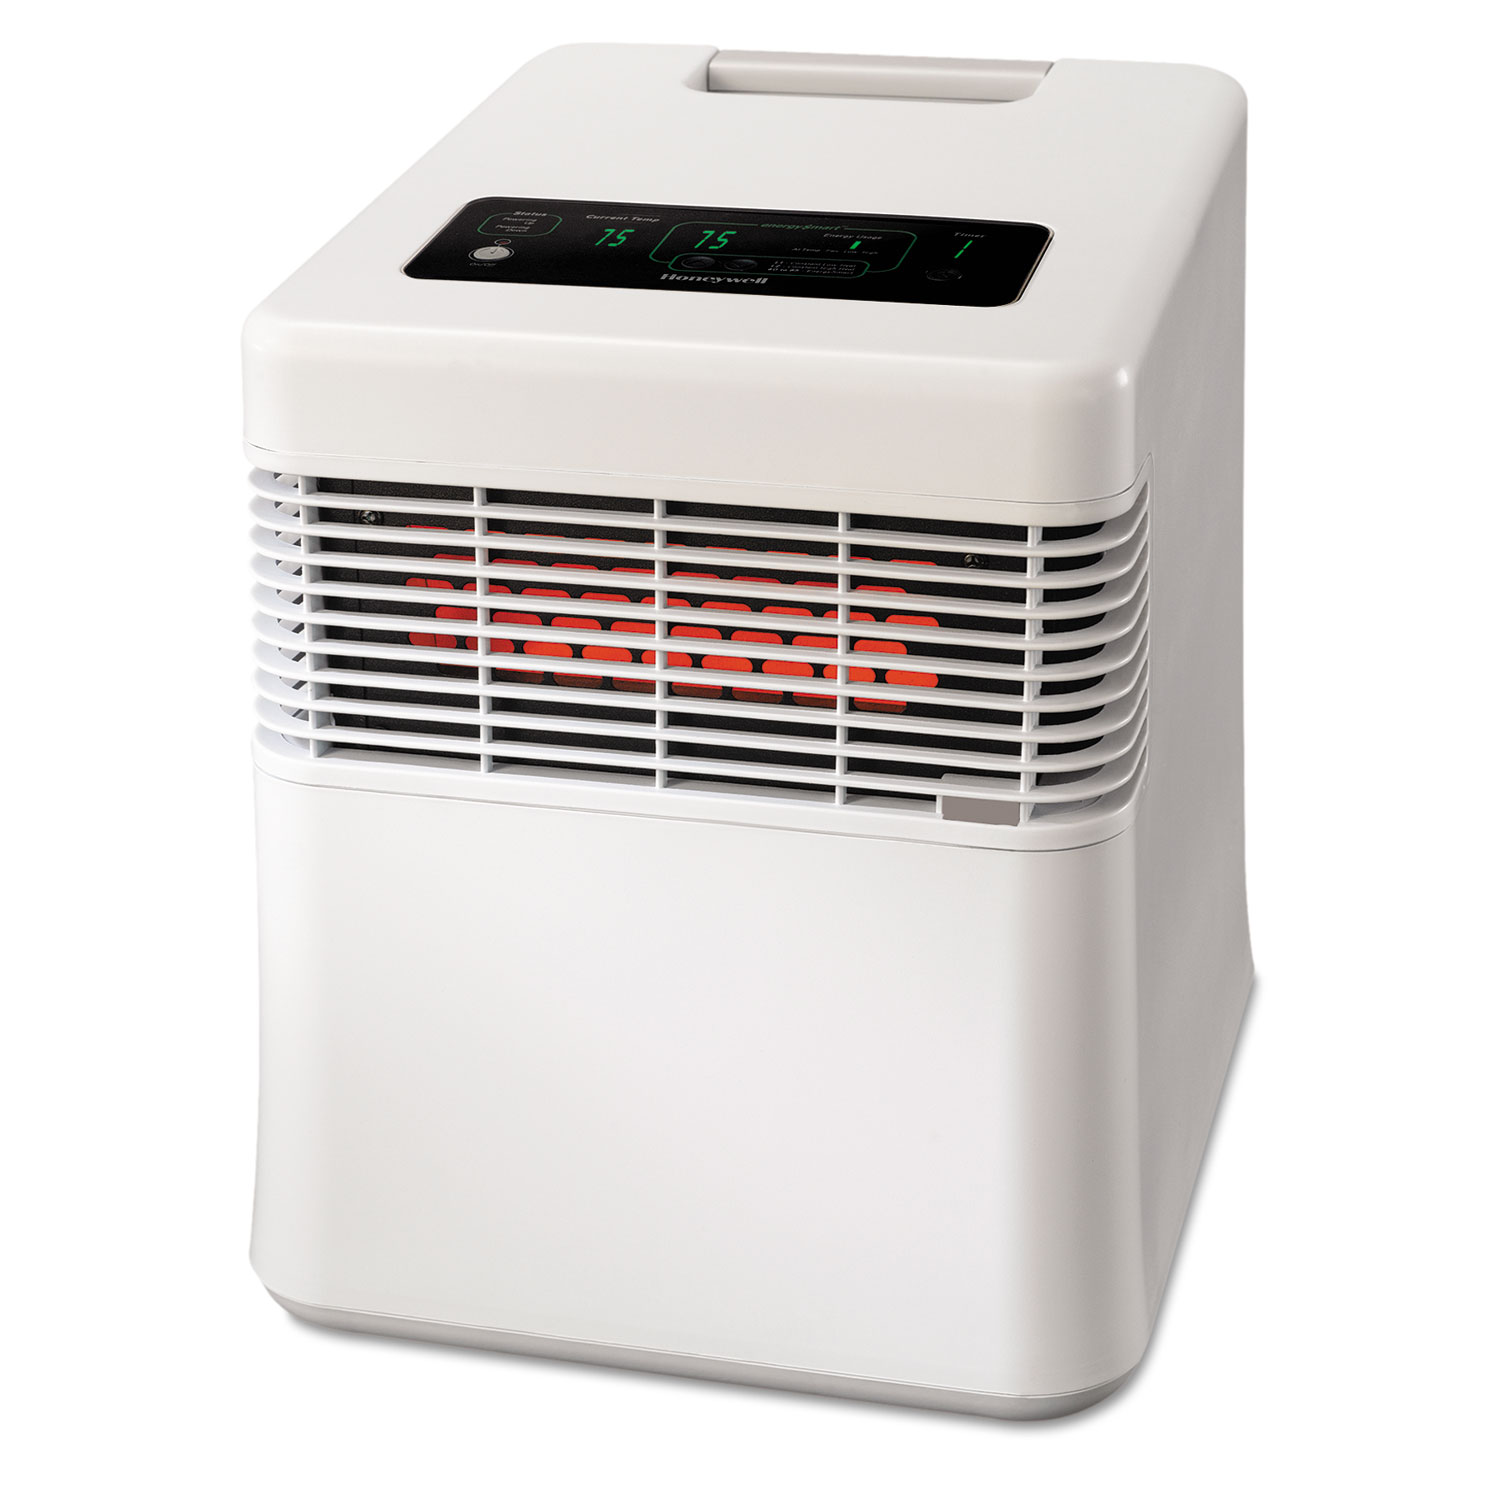  Honeywell HZ970 Energy Smart HZ-970 Infrared Heater, 15 87/100 x 17 83/100 x 19 18/25, White (HWLHZ970) 